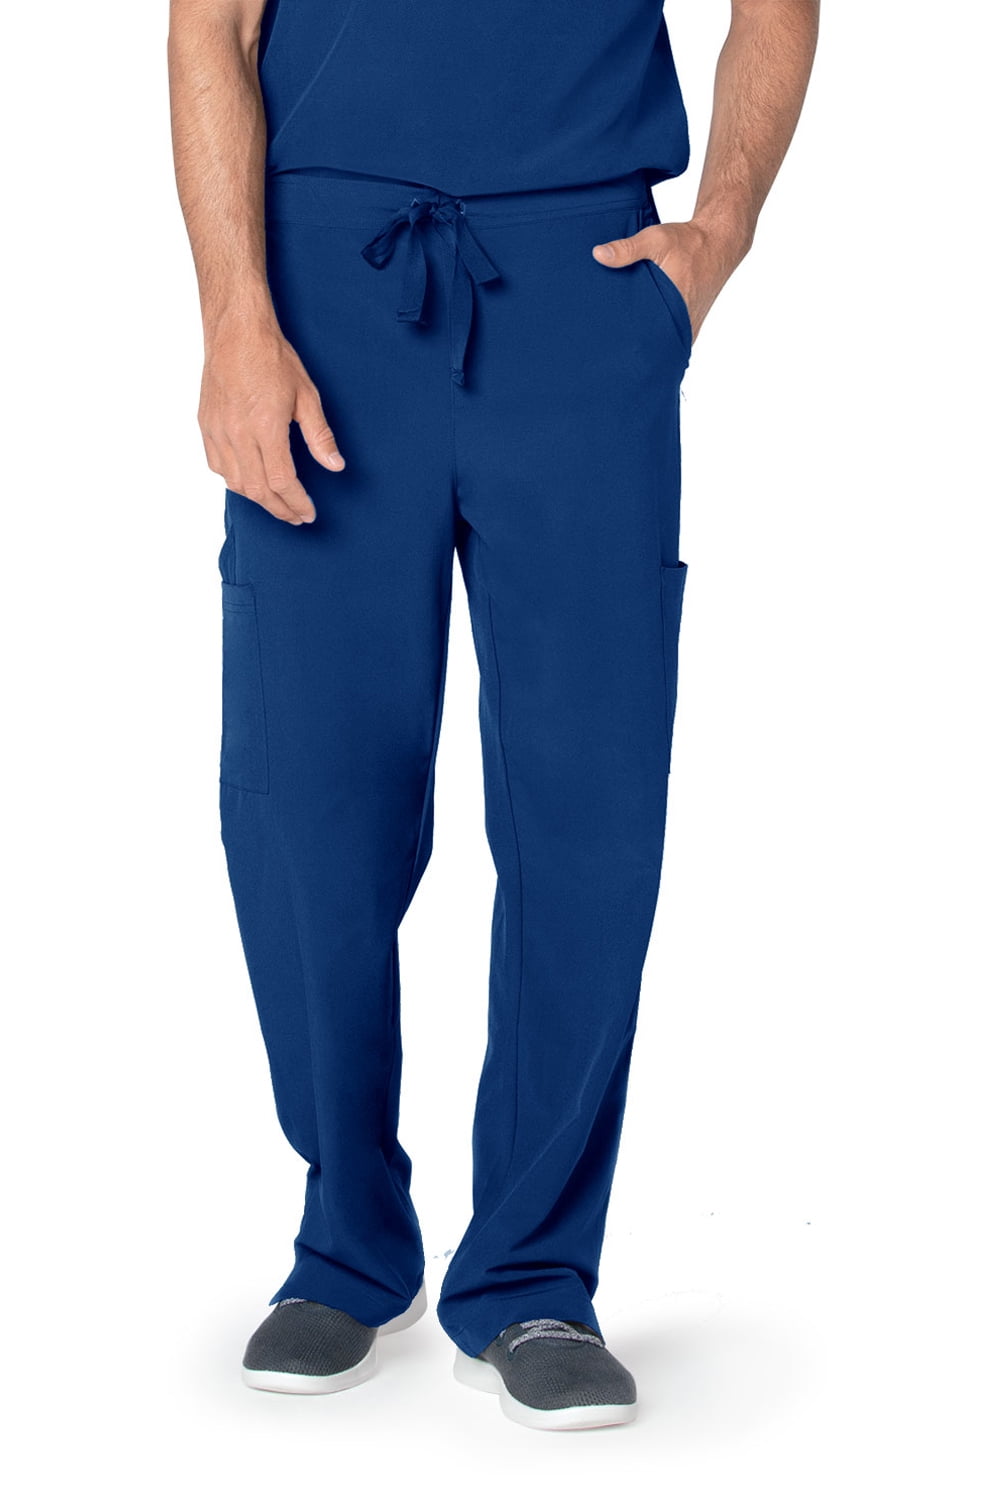 Adar Addition Scrubs For Men - Classic Cargo Scrub Pants - Walmart.com ...